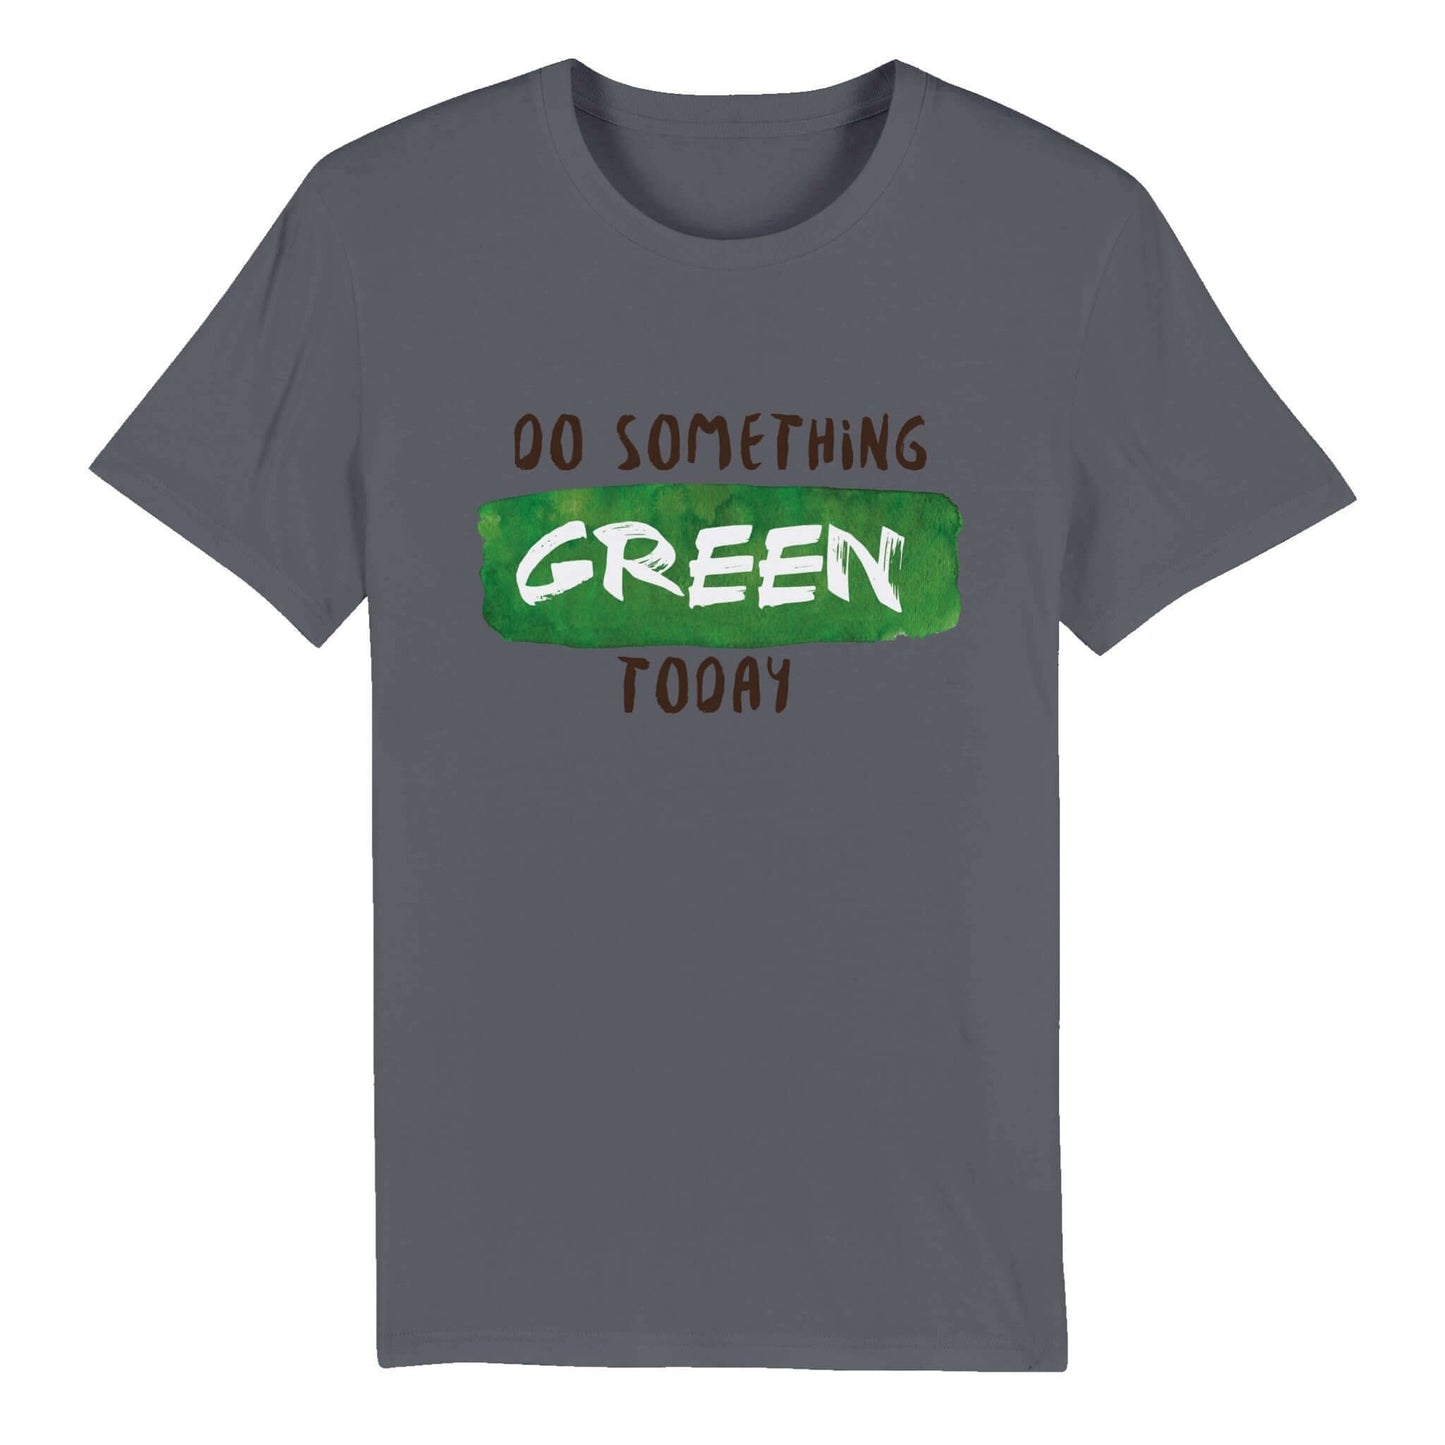 Unisex Crewneck T-shirt "Do Something Green" - Just Baskets